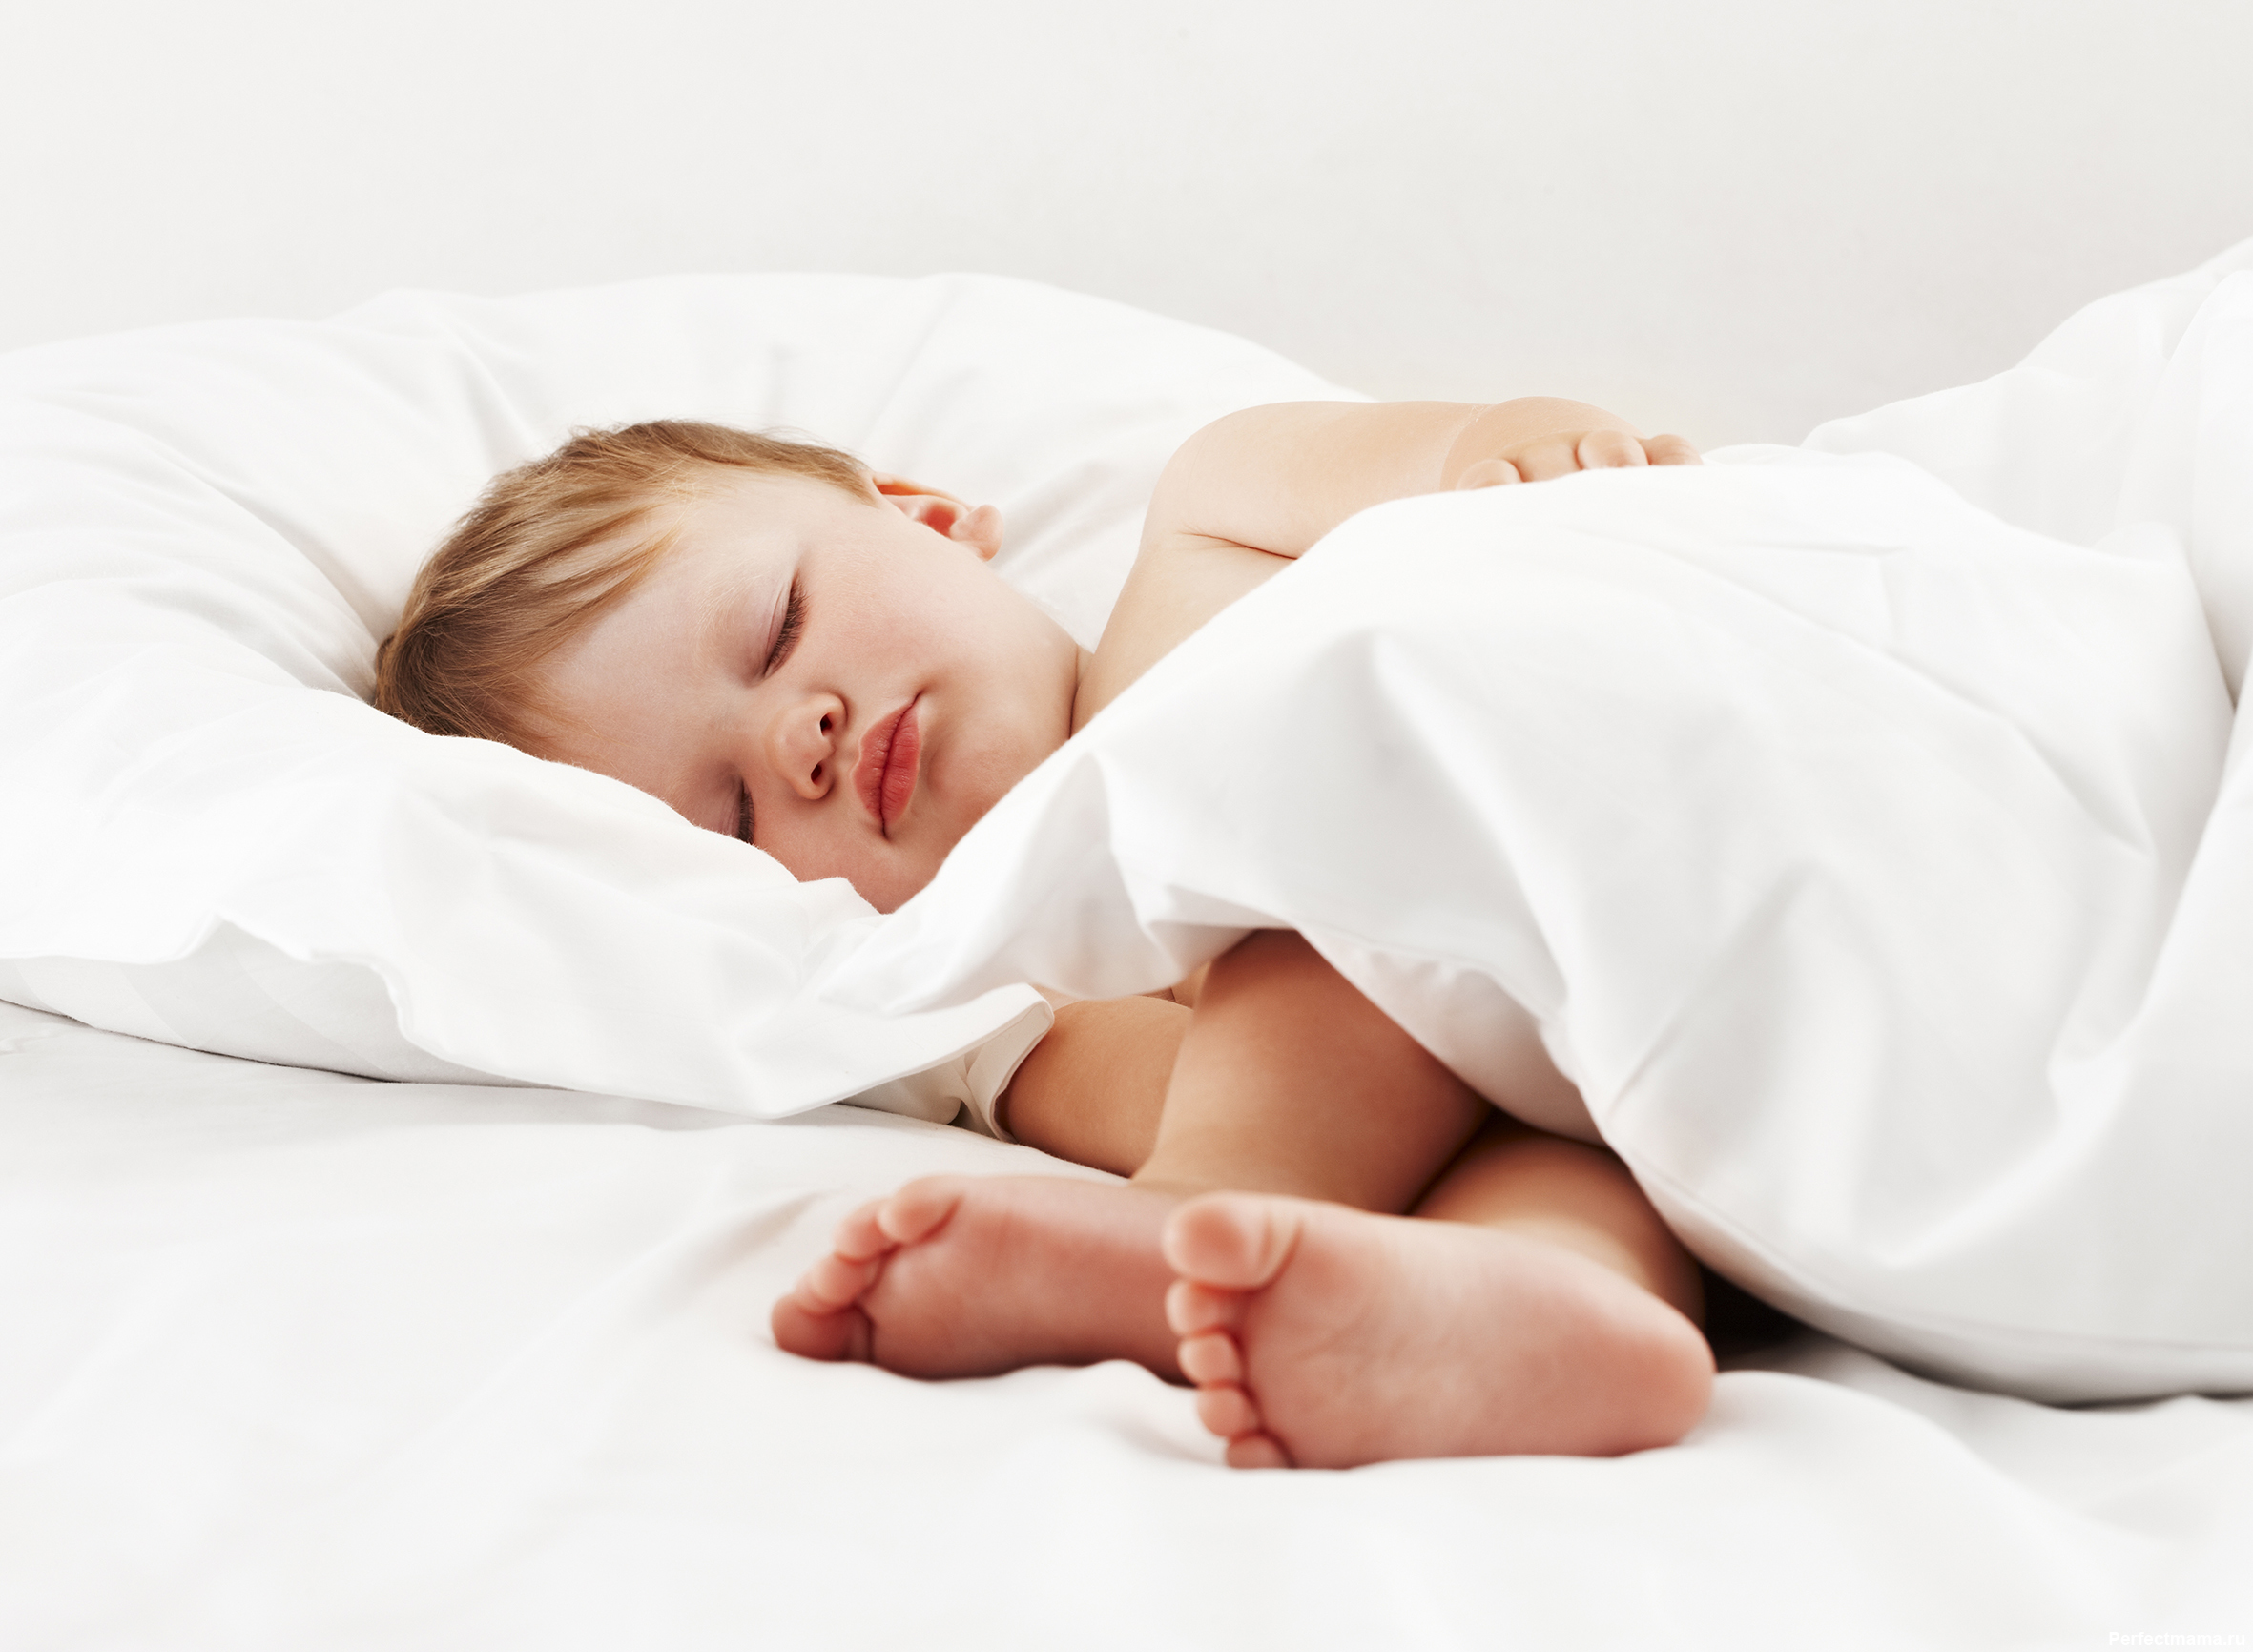 Baby lying on white sheet